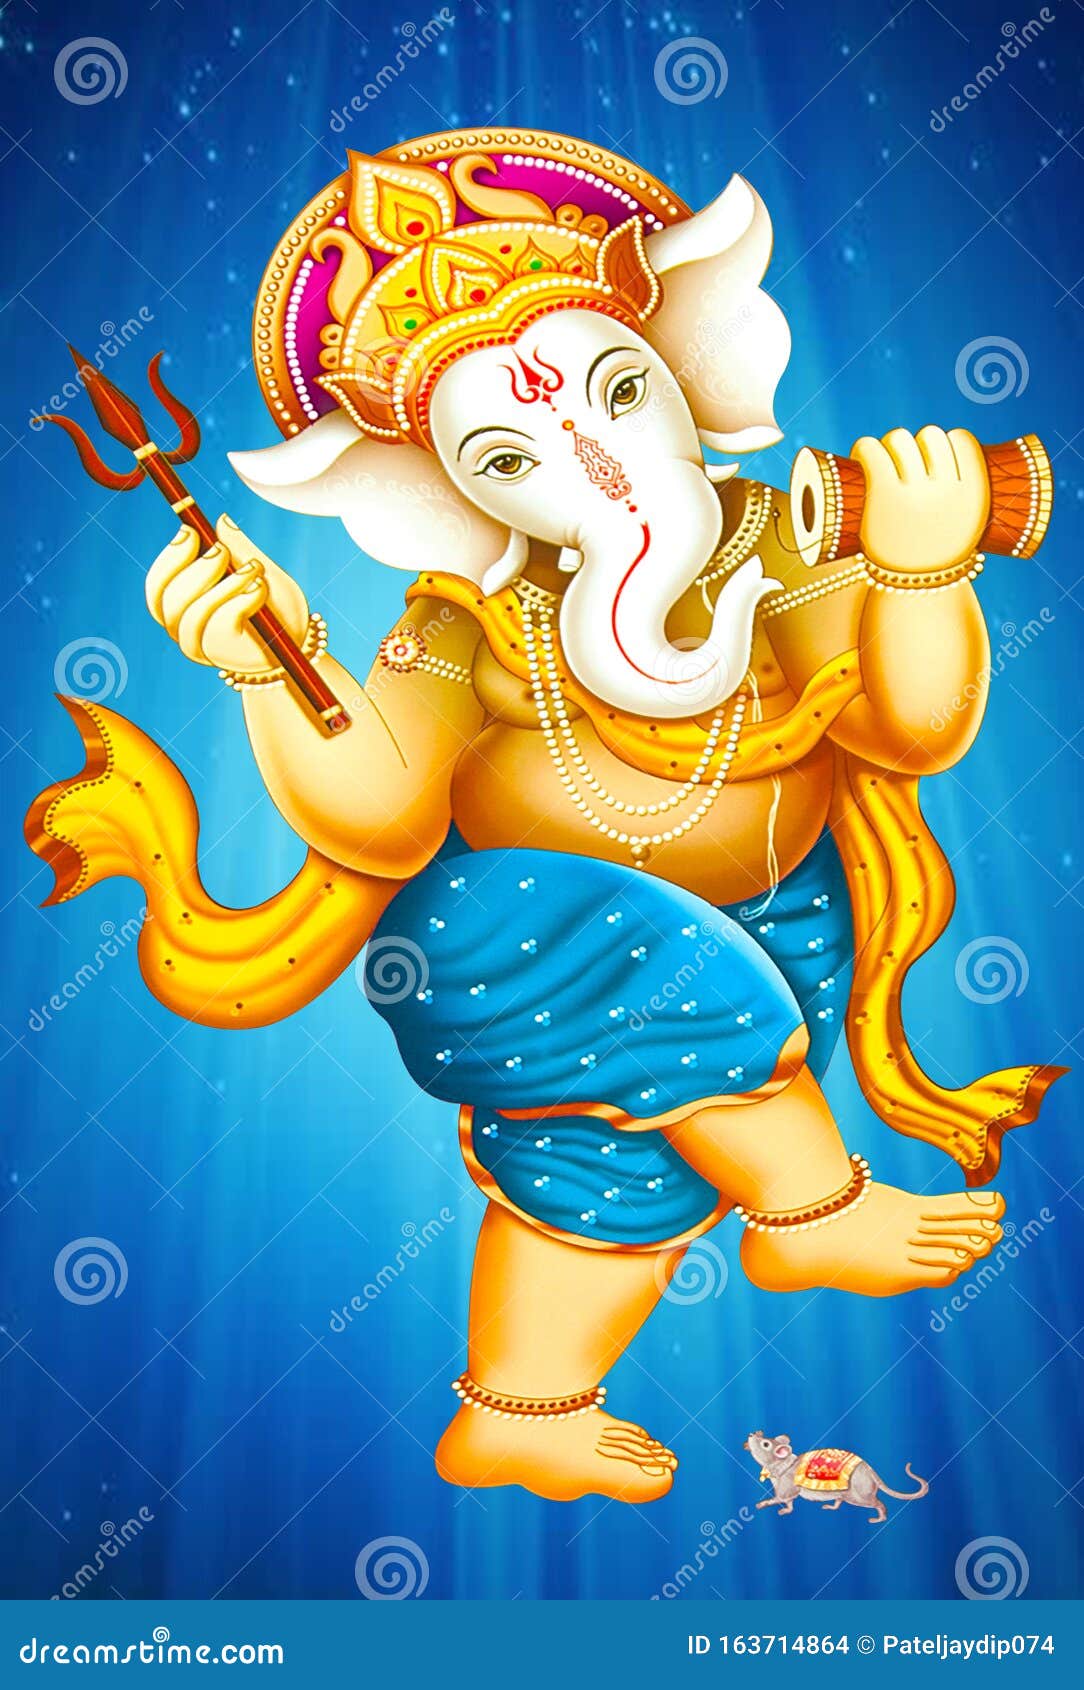 Hindu Lord Ganesha Texture Wallpaper Background Stock Photo ...